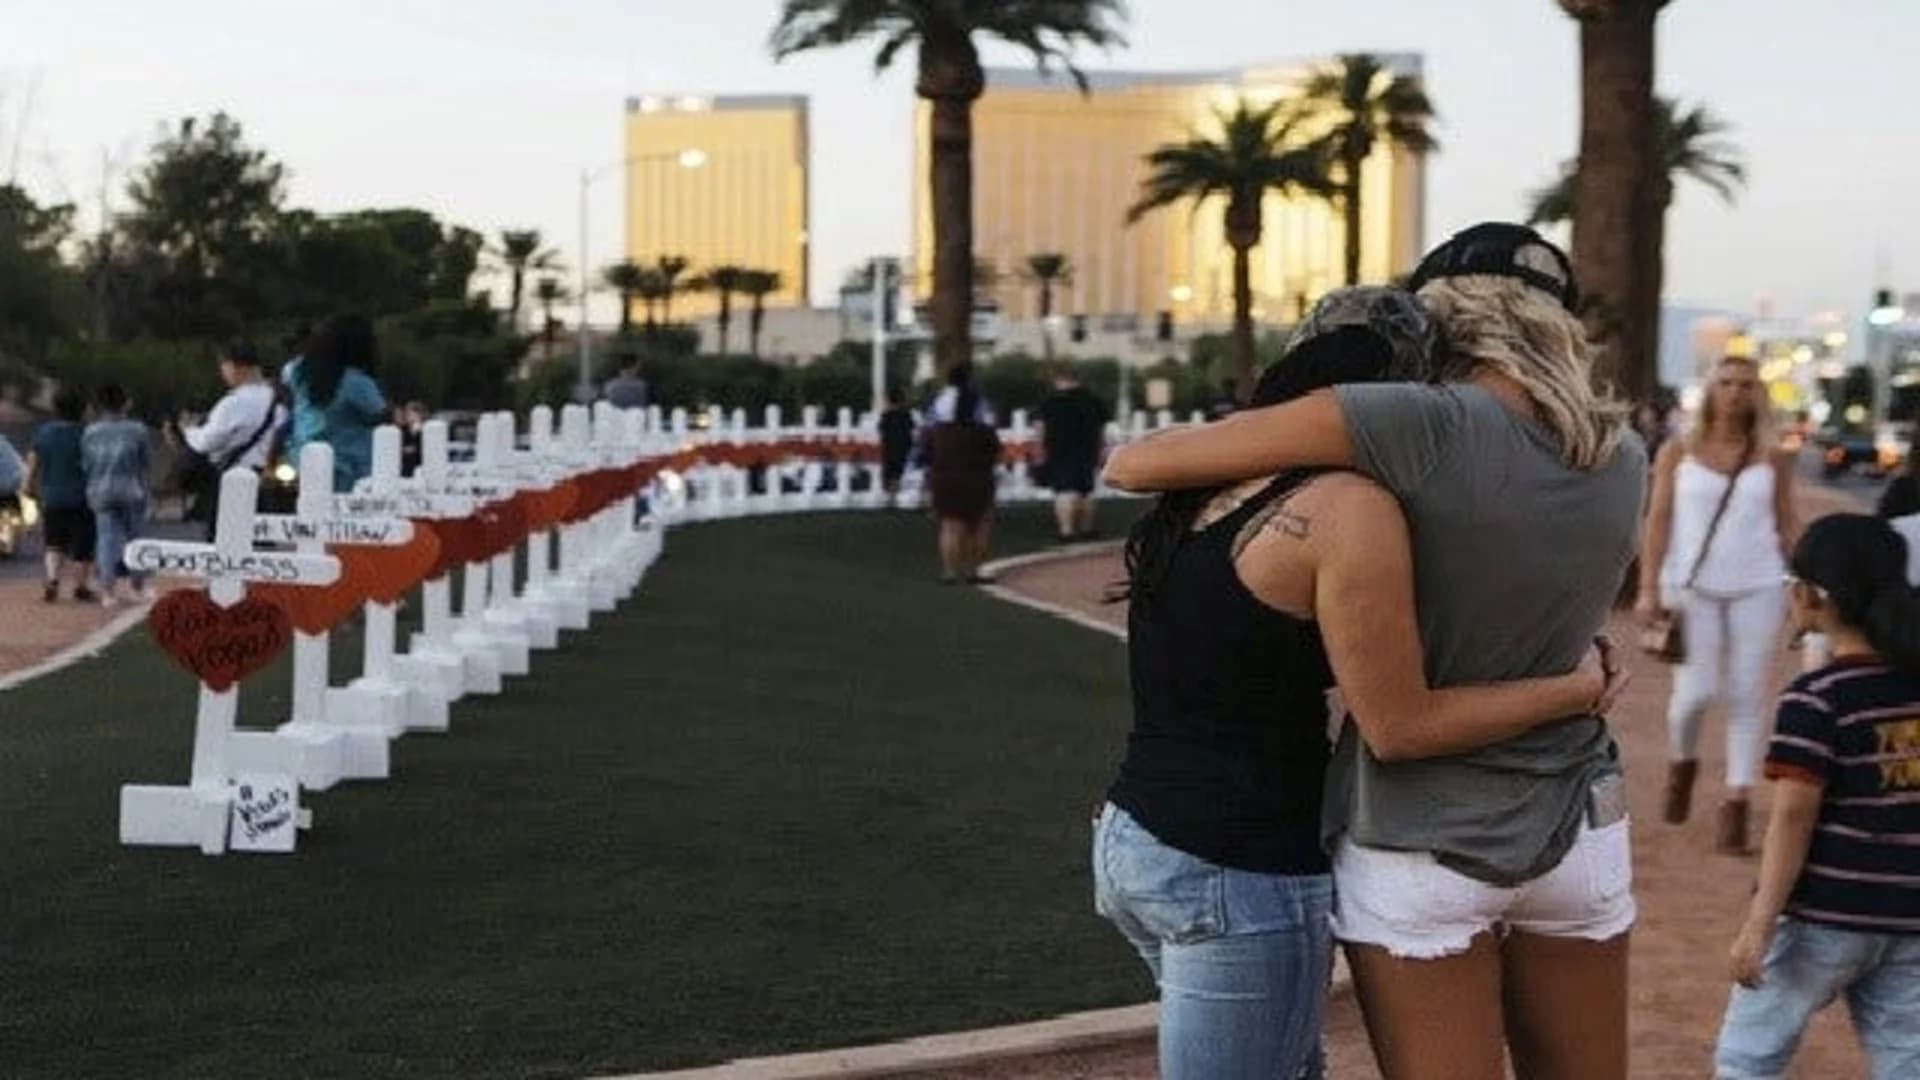 Coroner: Gunfire killed all 58 victims in Las Vegas shooting